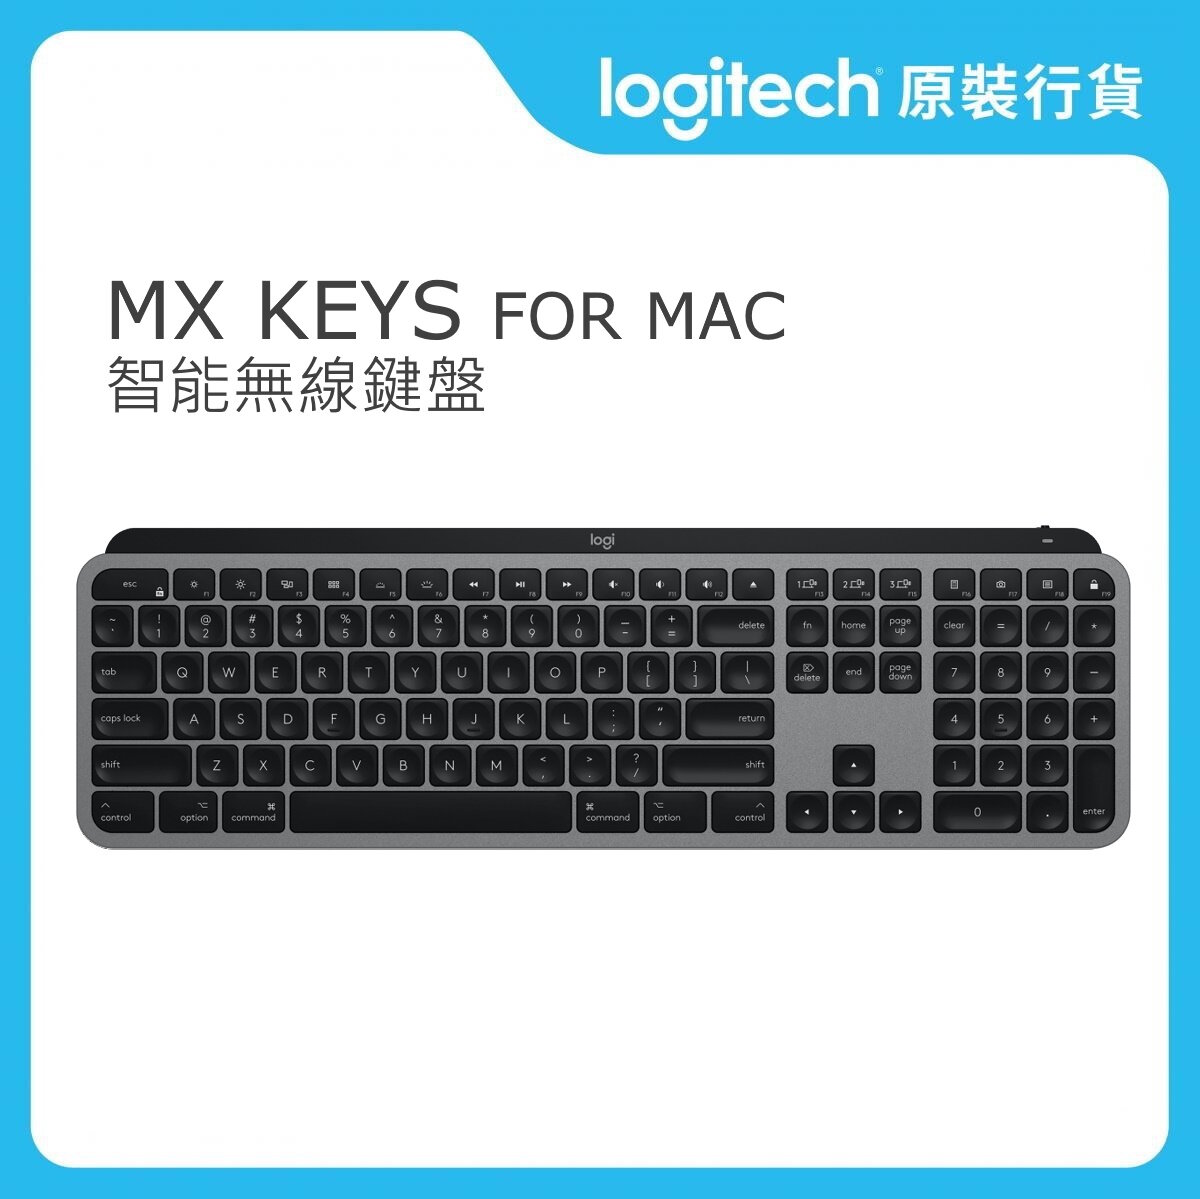 Master 系列 - MX KEYS FOR MAC 智能無線鍵盤 (920-009560)